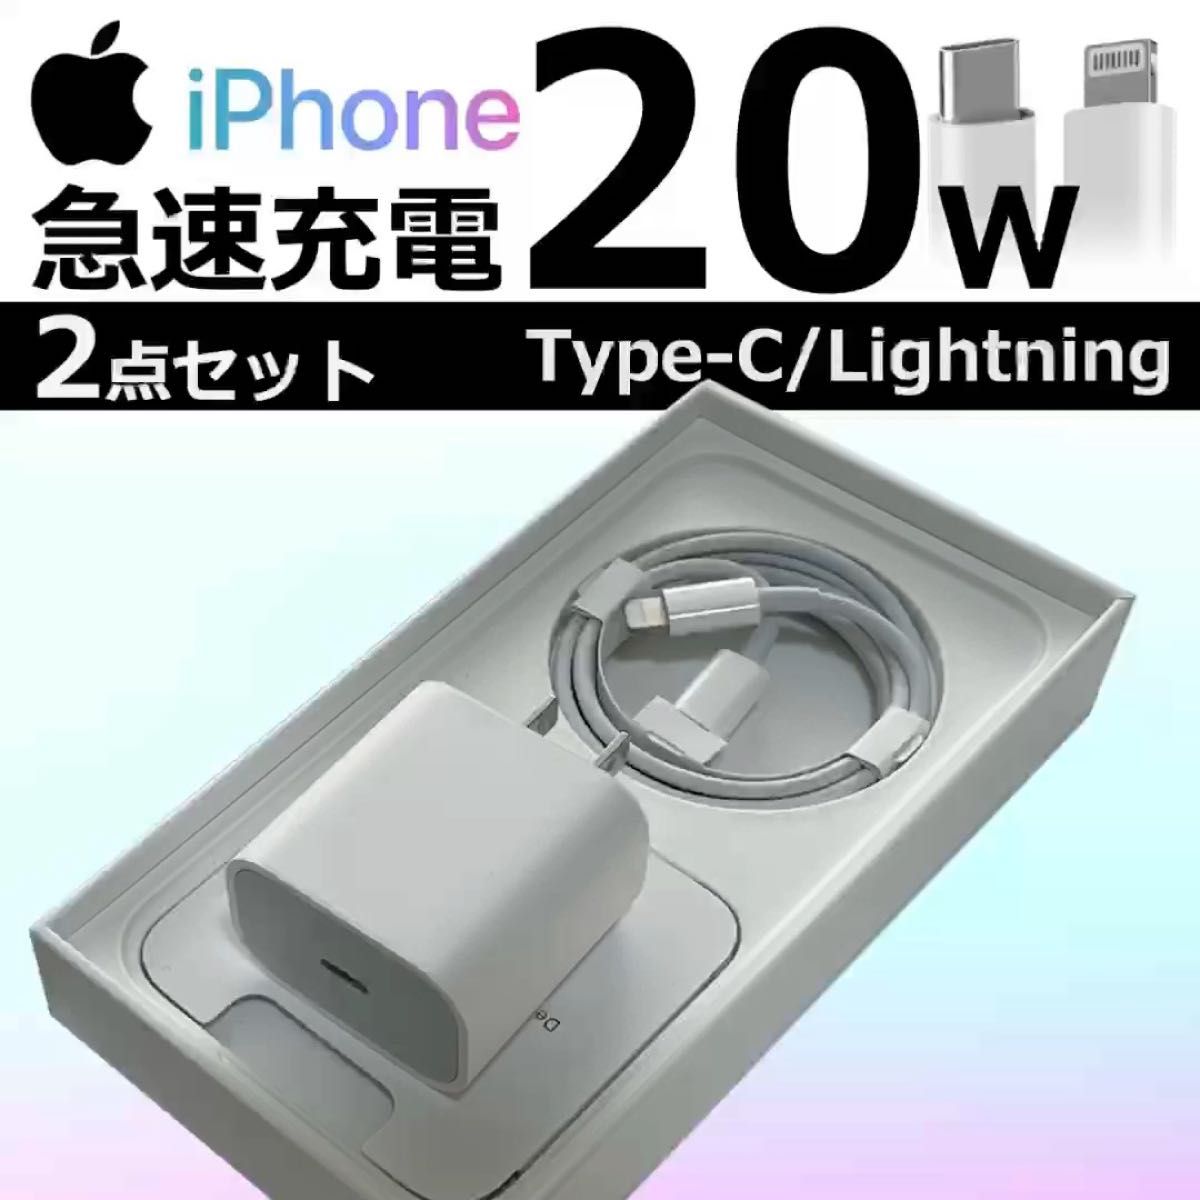 iPhone Type-C 20W lightning cable ライトニングケーブル 急速充電 USB 高速充電 データ通信